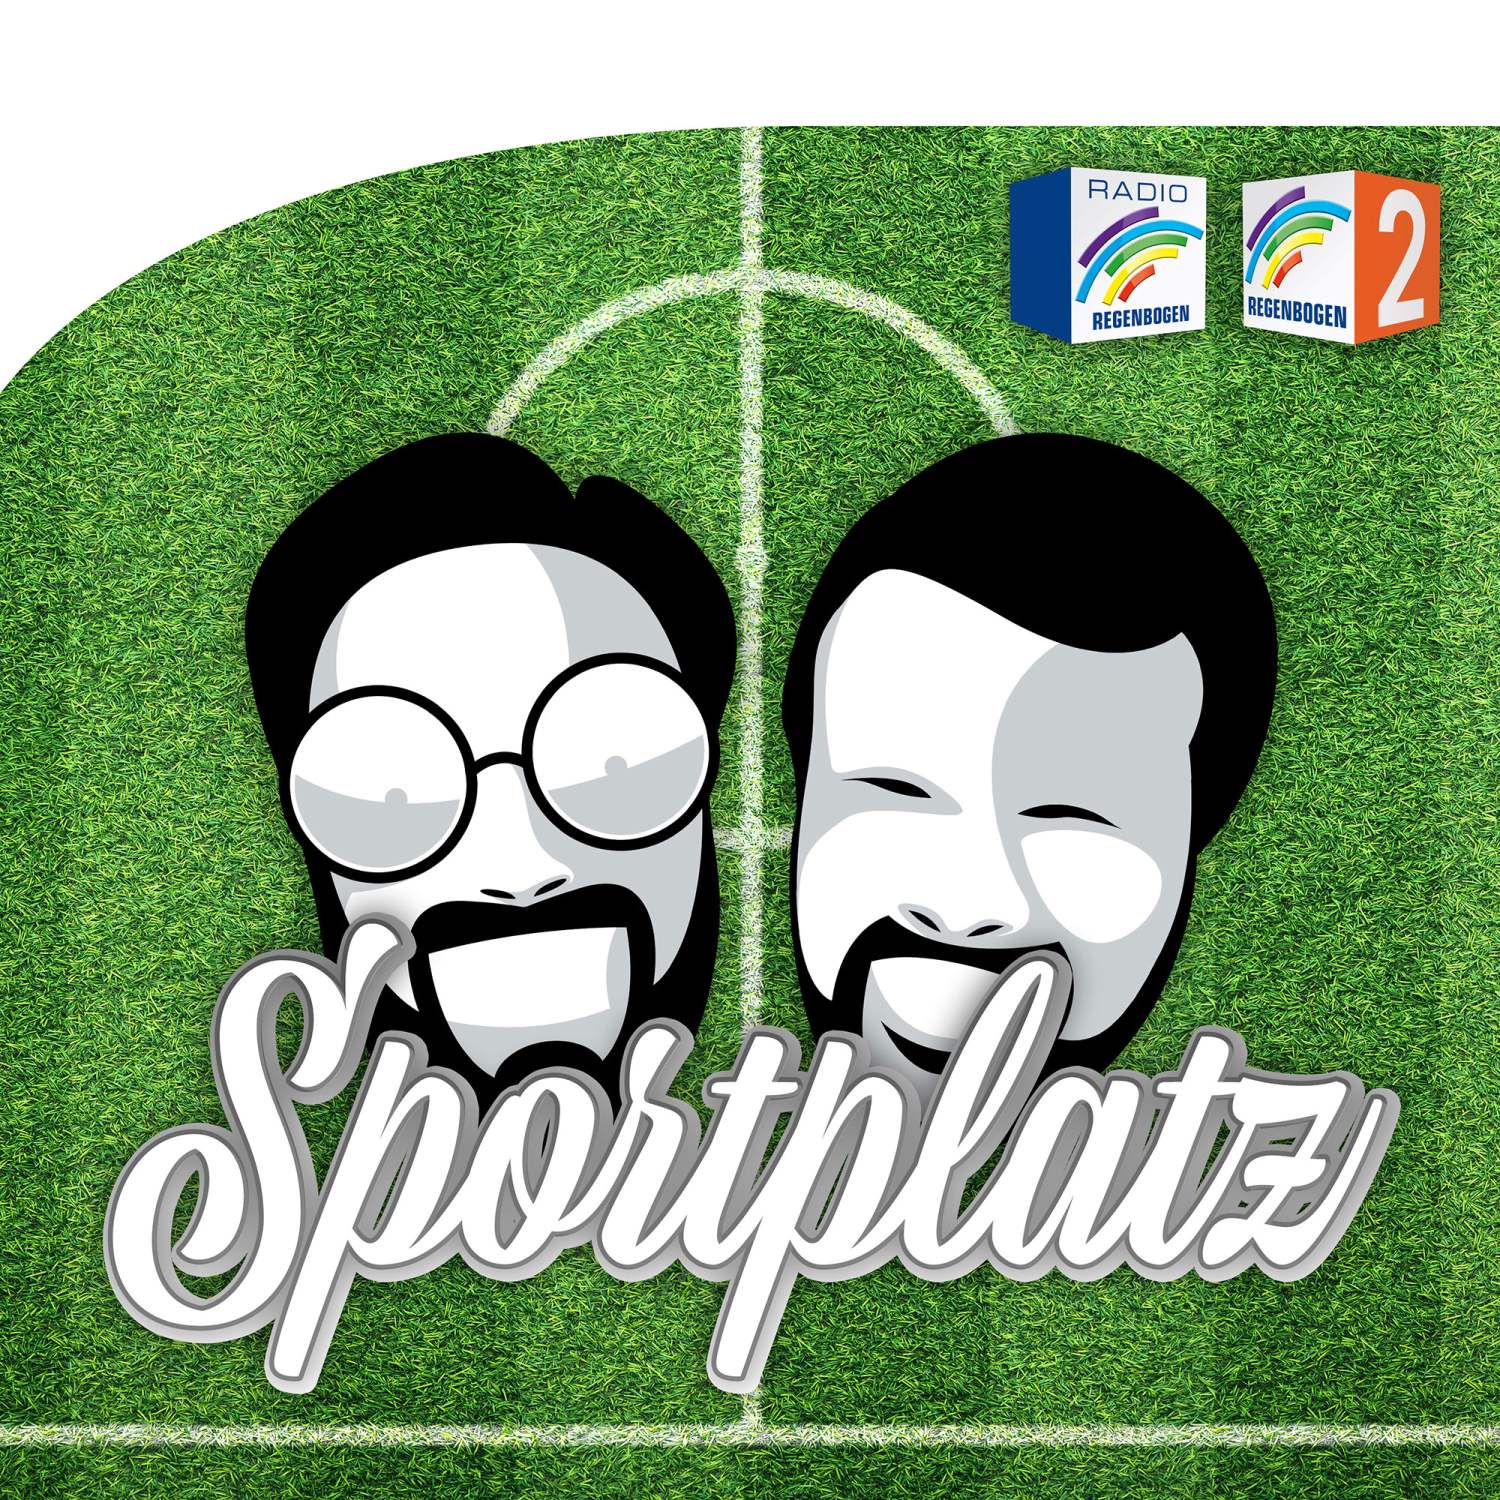 Podcast Radio Regenbogen Sportplatz: Sport im Südwesten